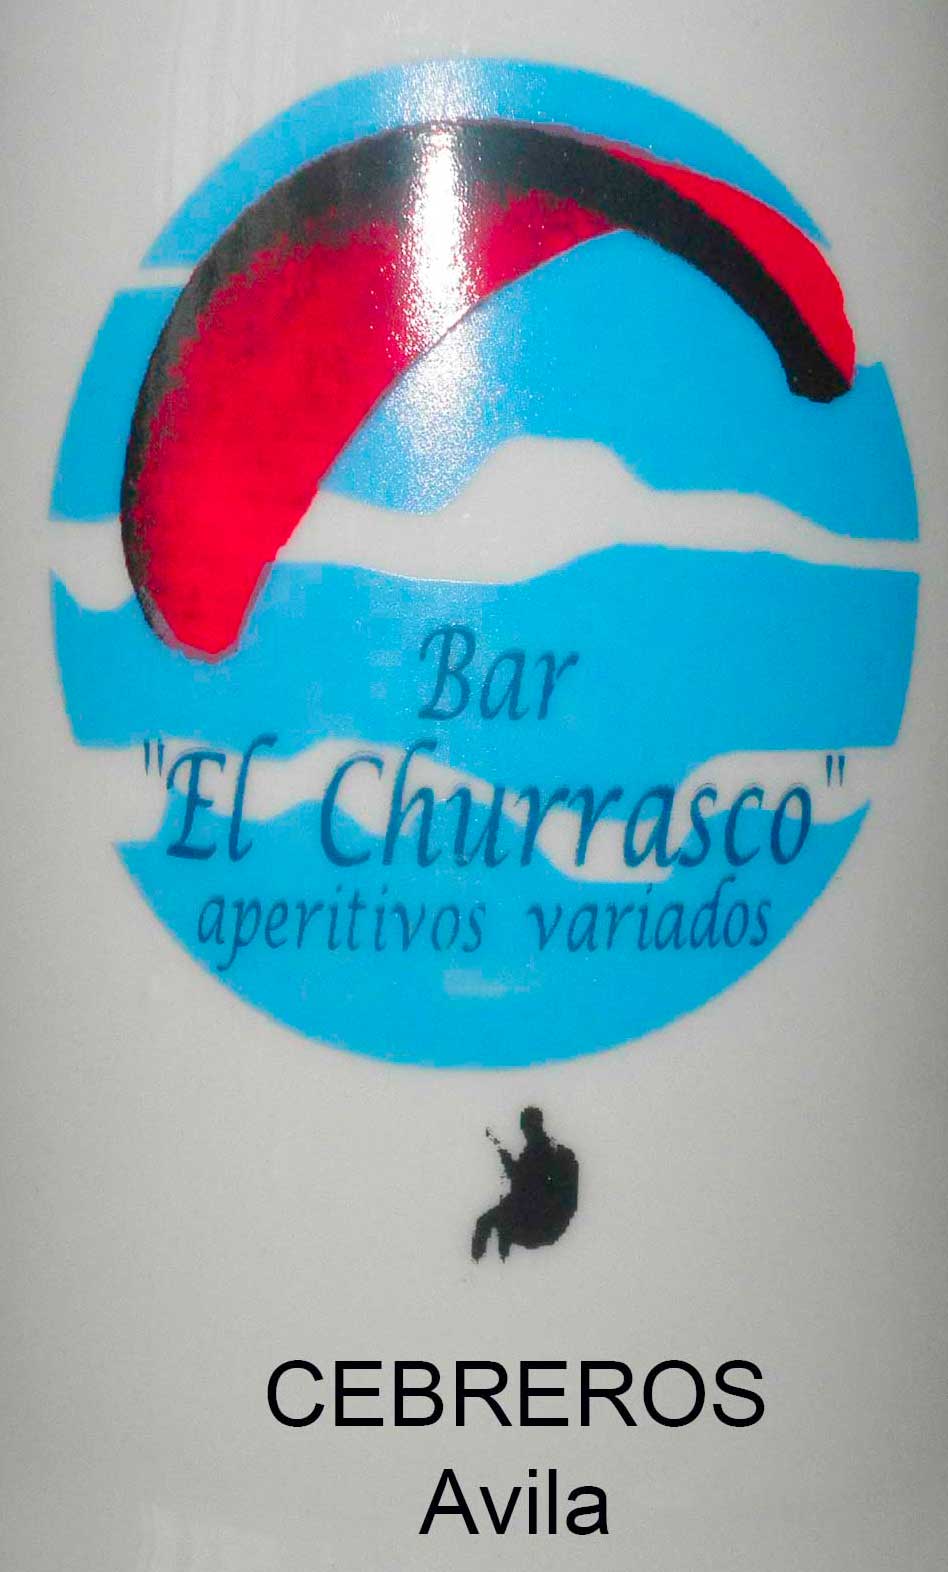 Bar El Churrasco en Cebreros (Avila)